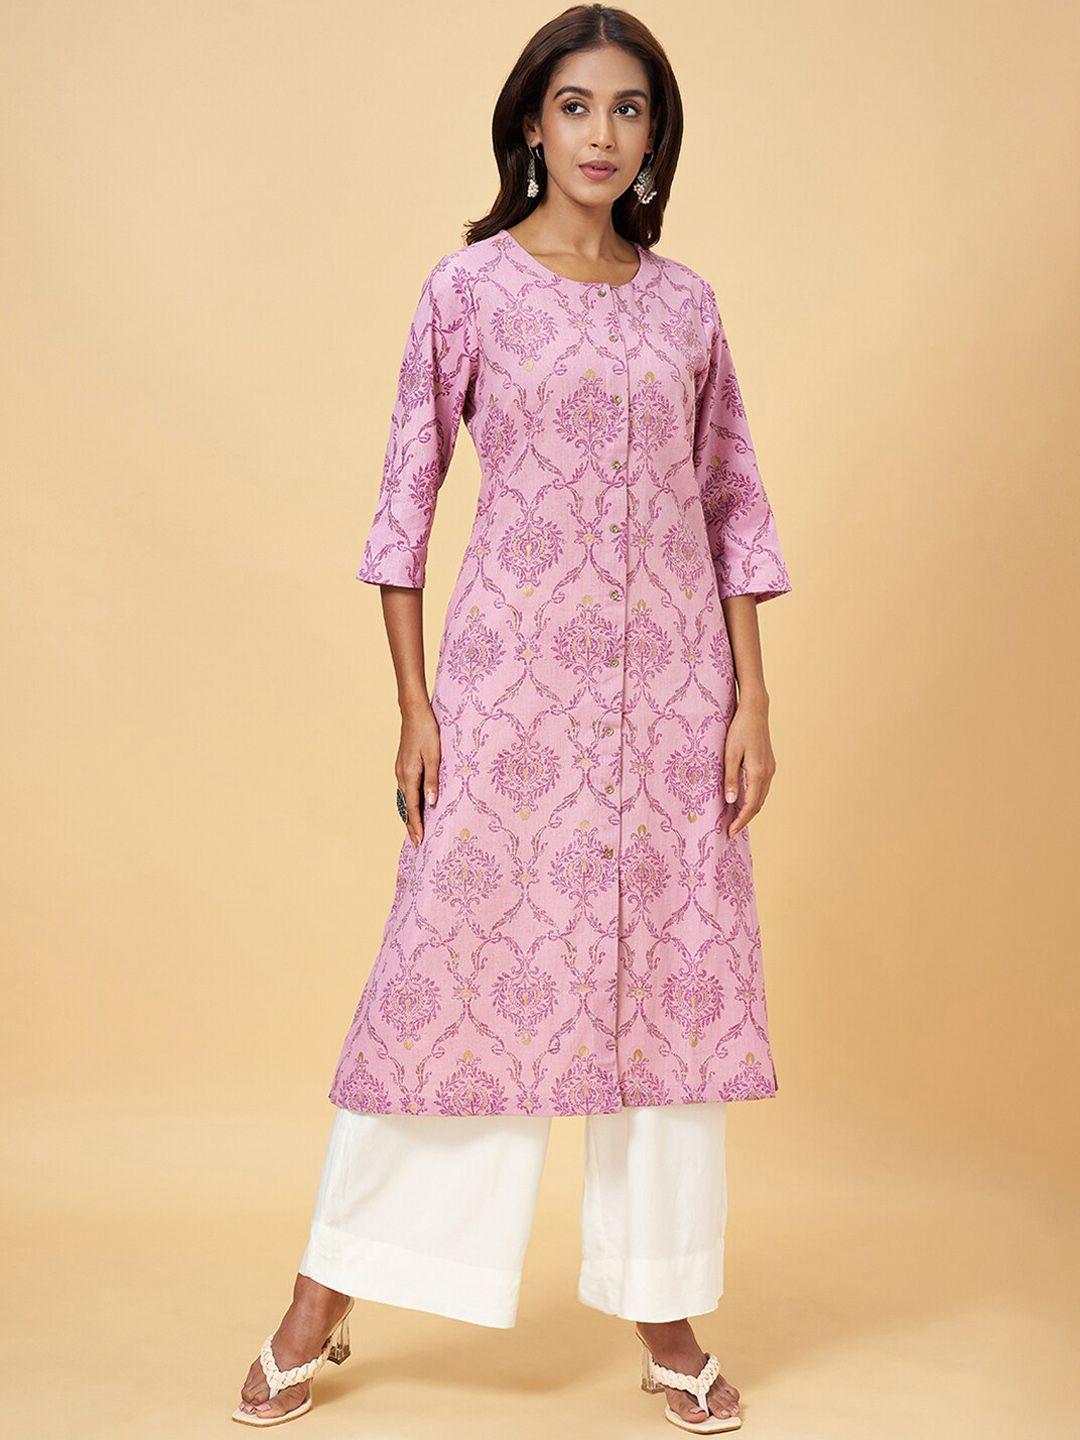 rangmanch by pantaloons ethnic motifs printed a-line kurta